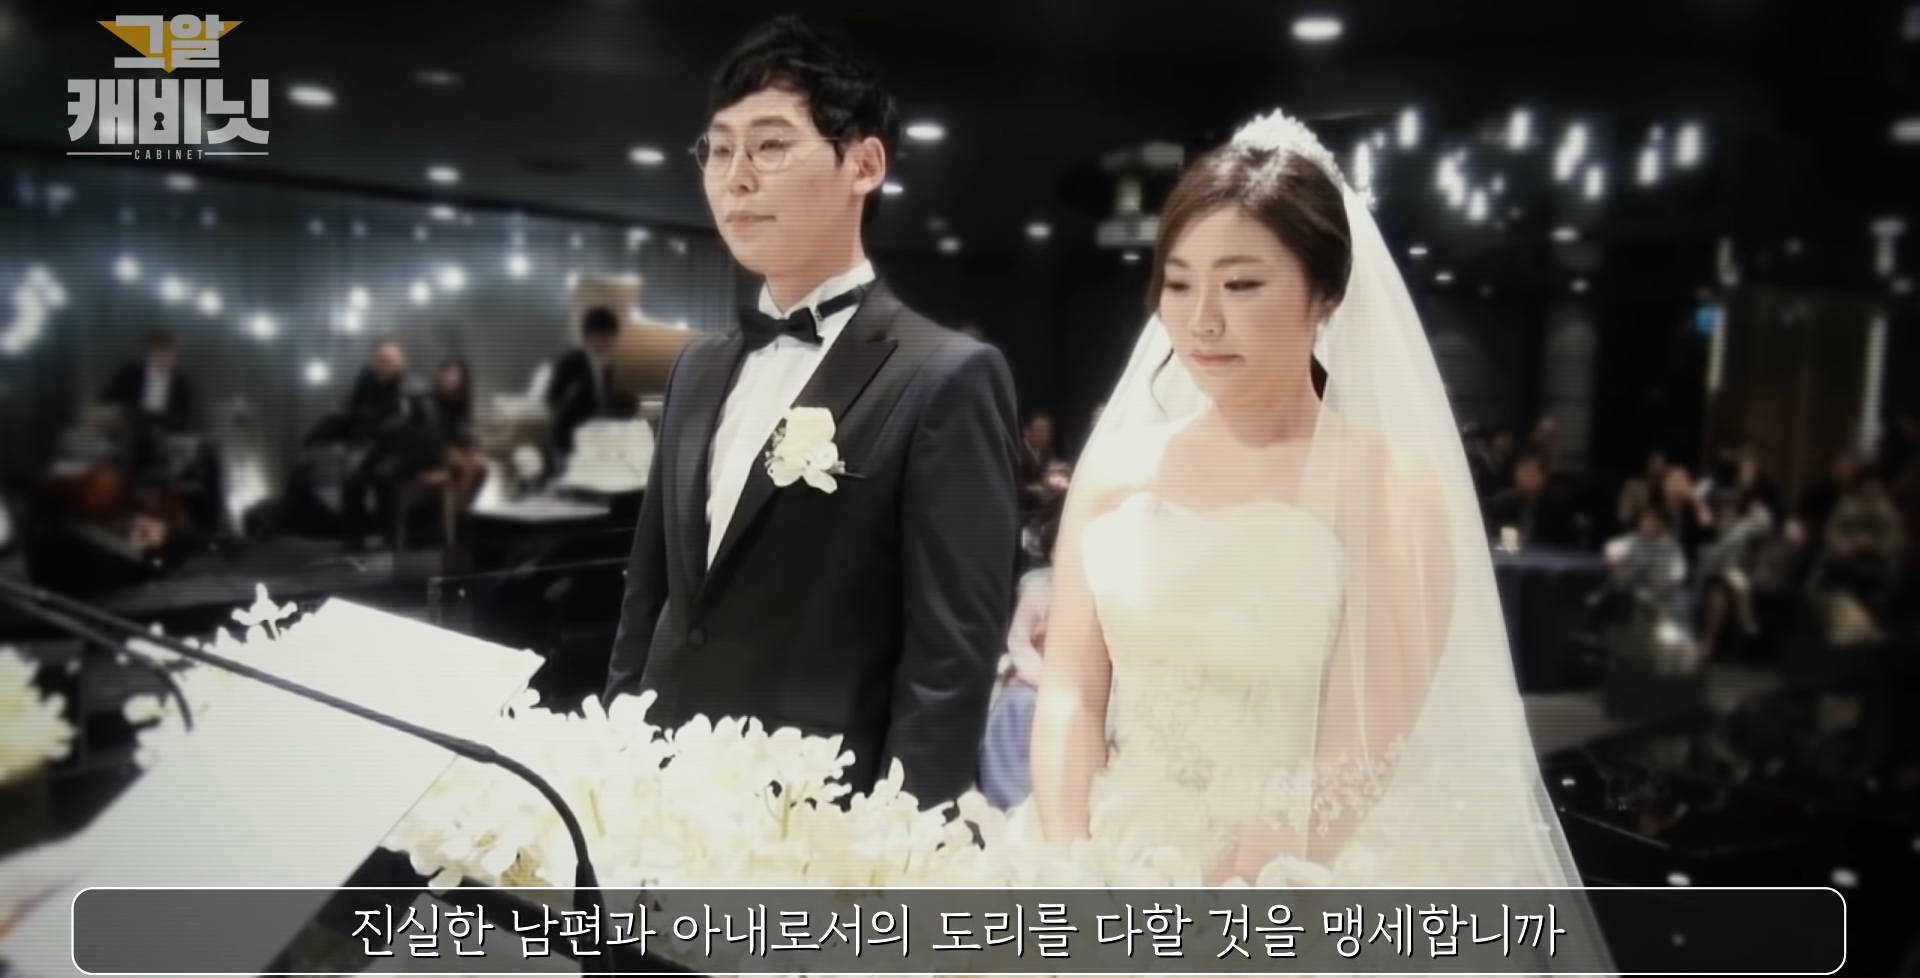 unsolved crimes in korea - seong-hee and min-geun